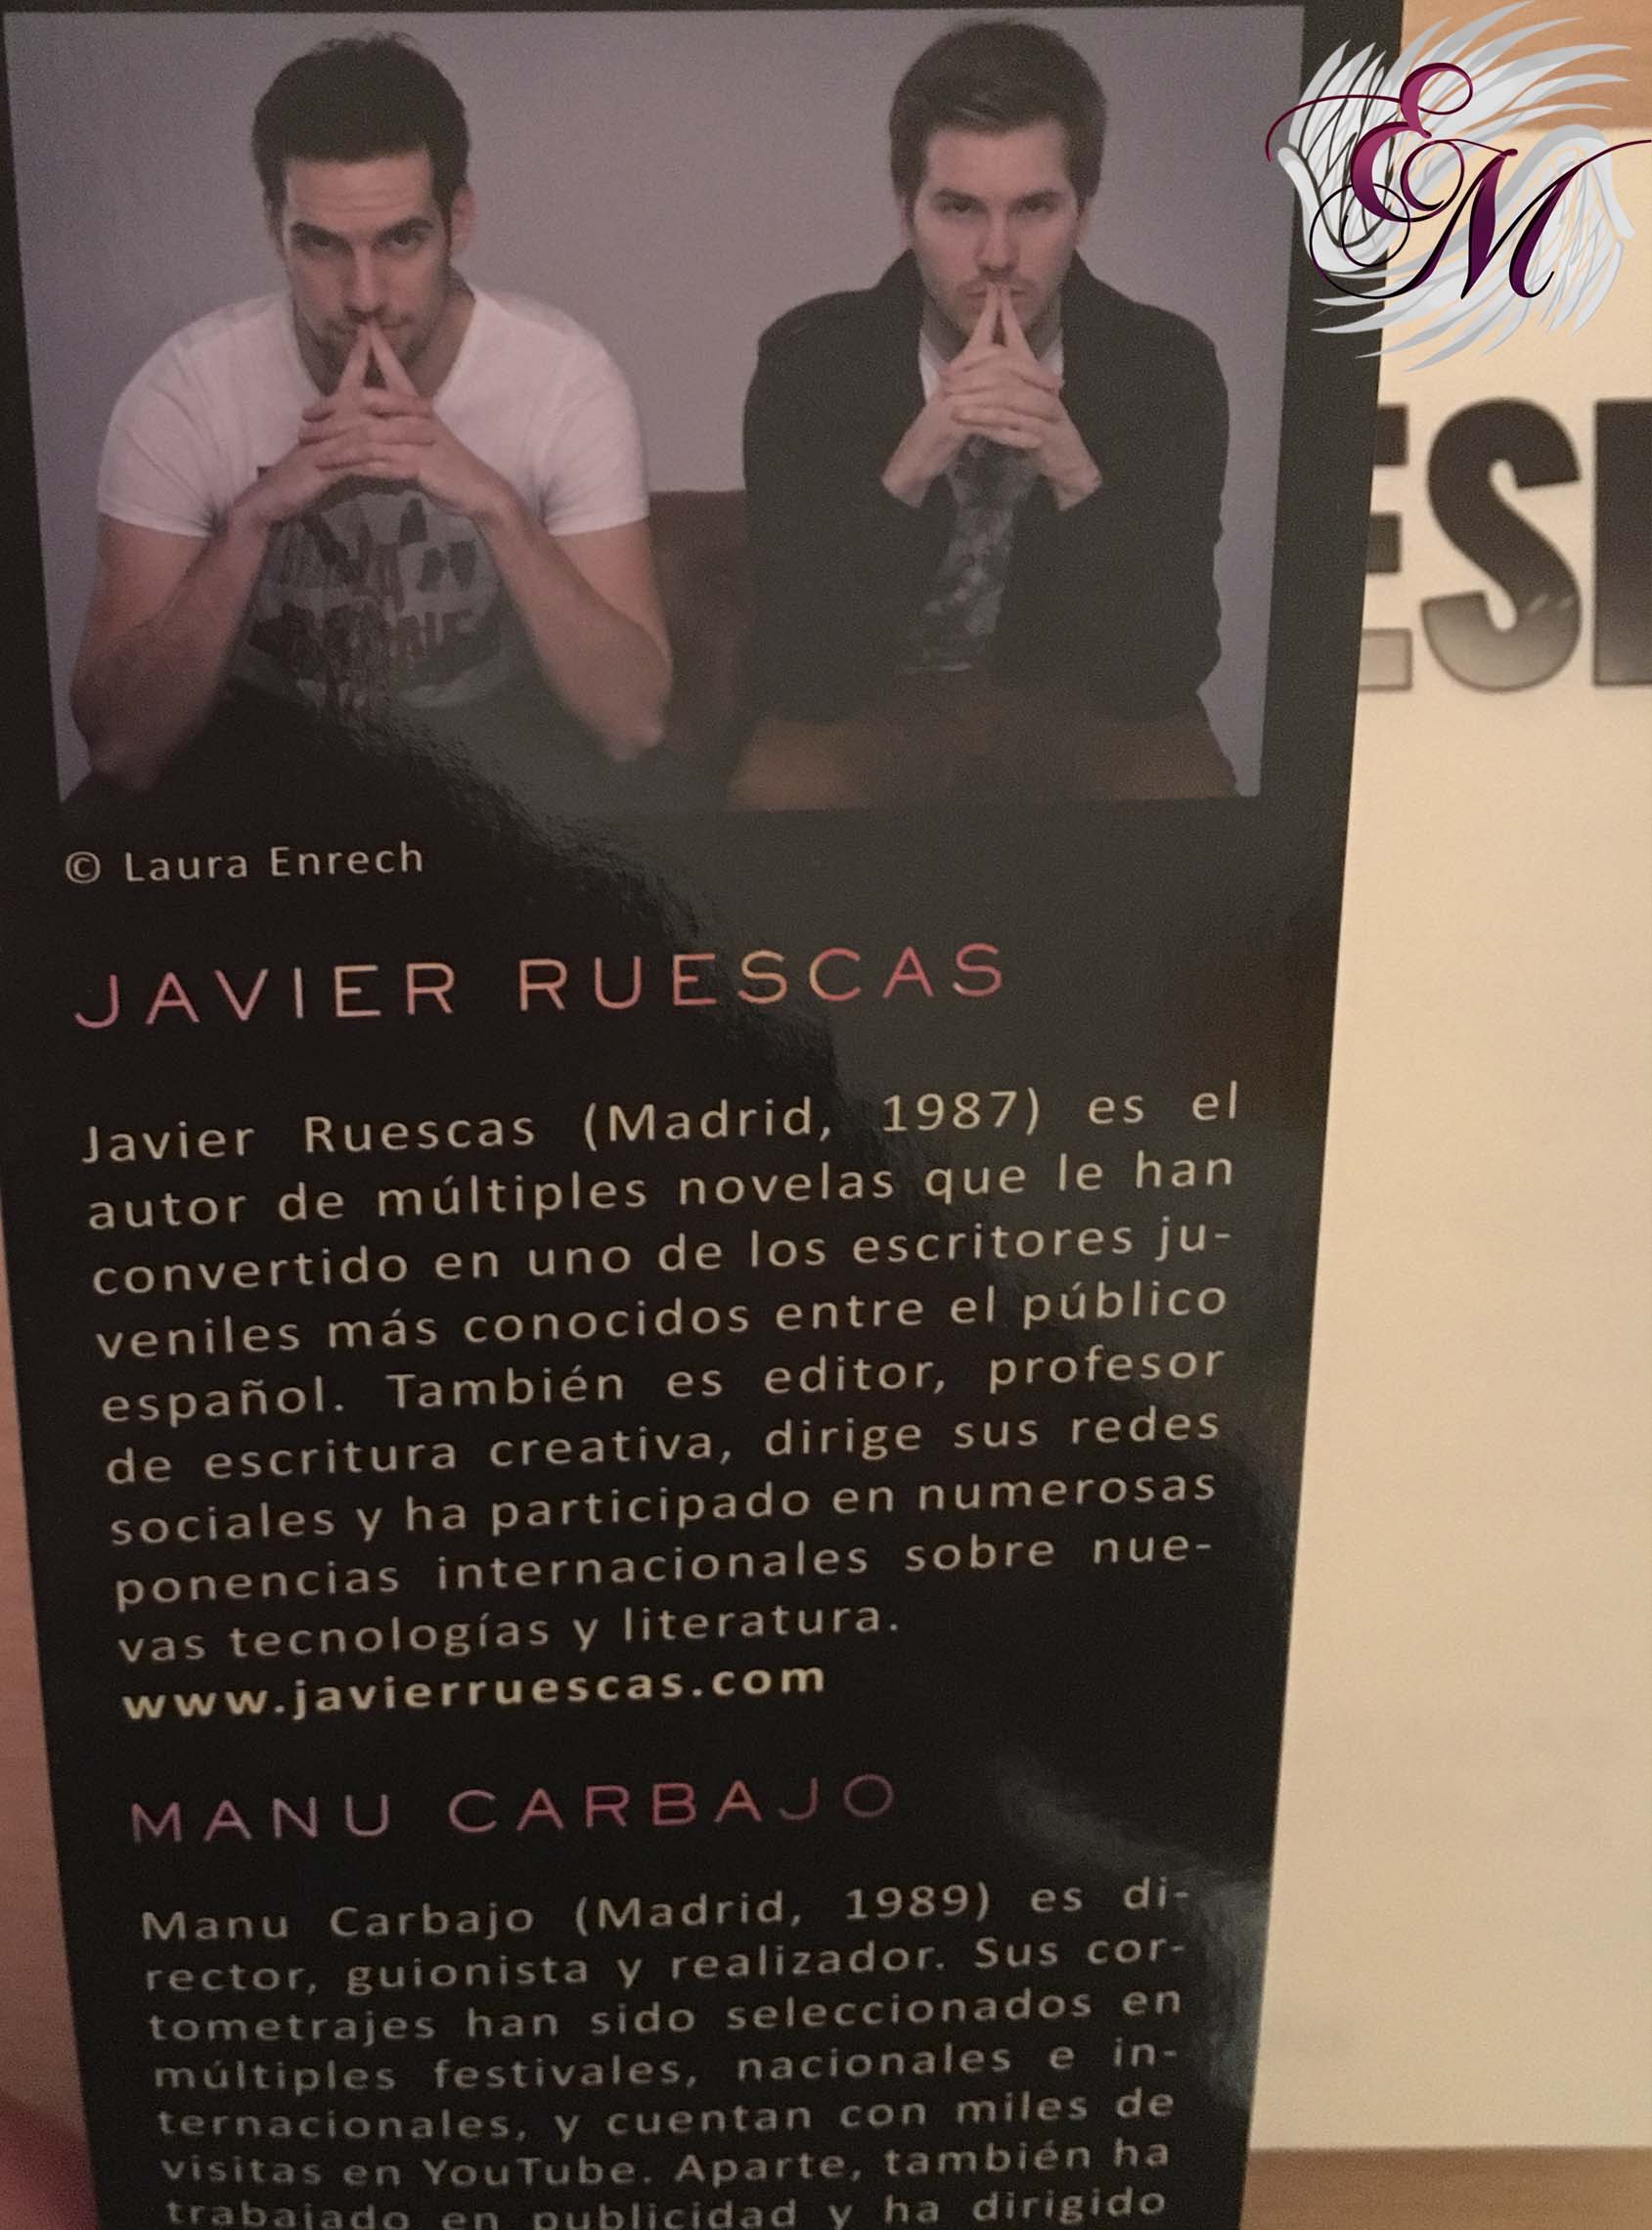 Némesis, Javier Ruescas y Manu Carbajo - Reseña